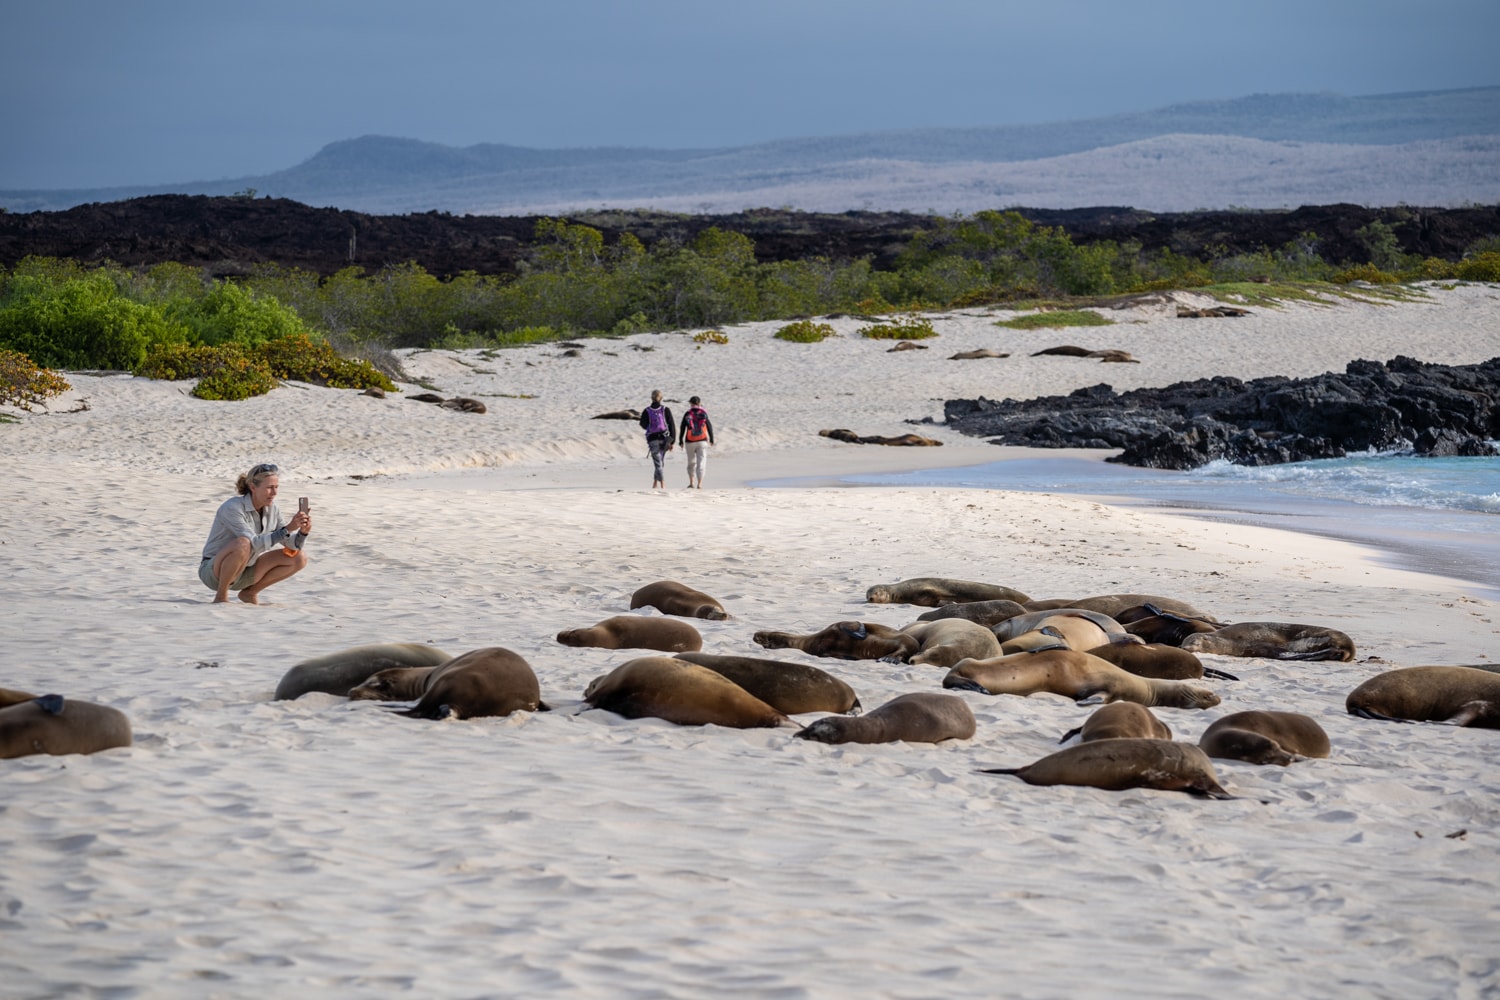 galapagos beaches